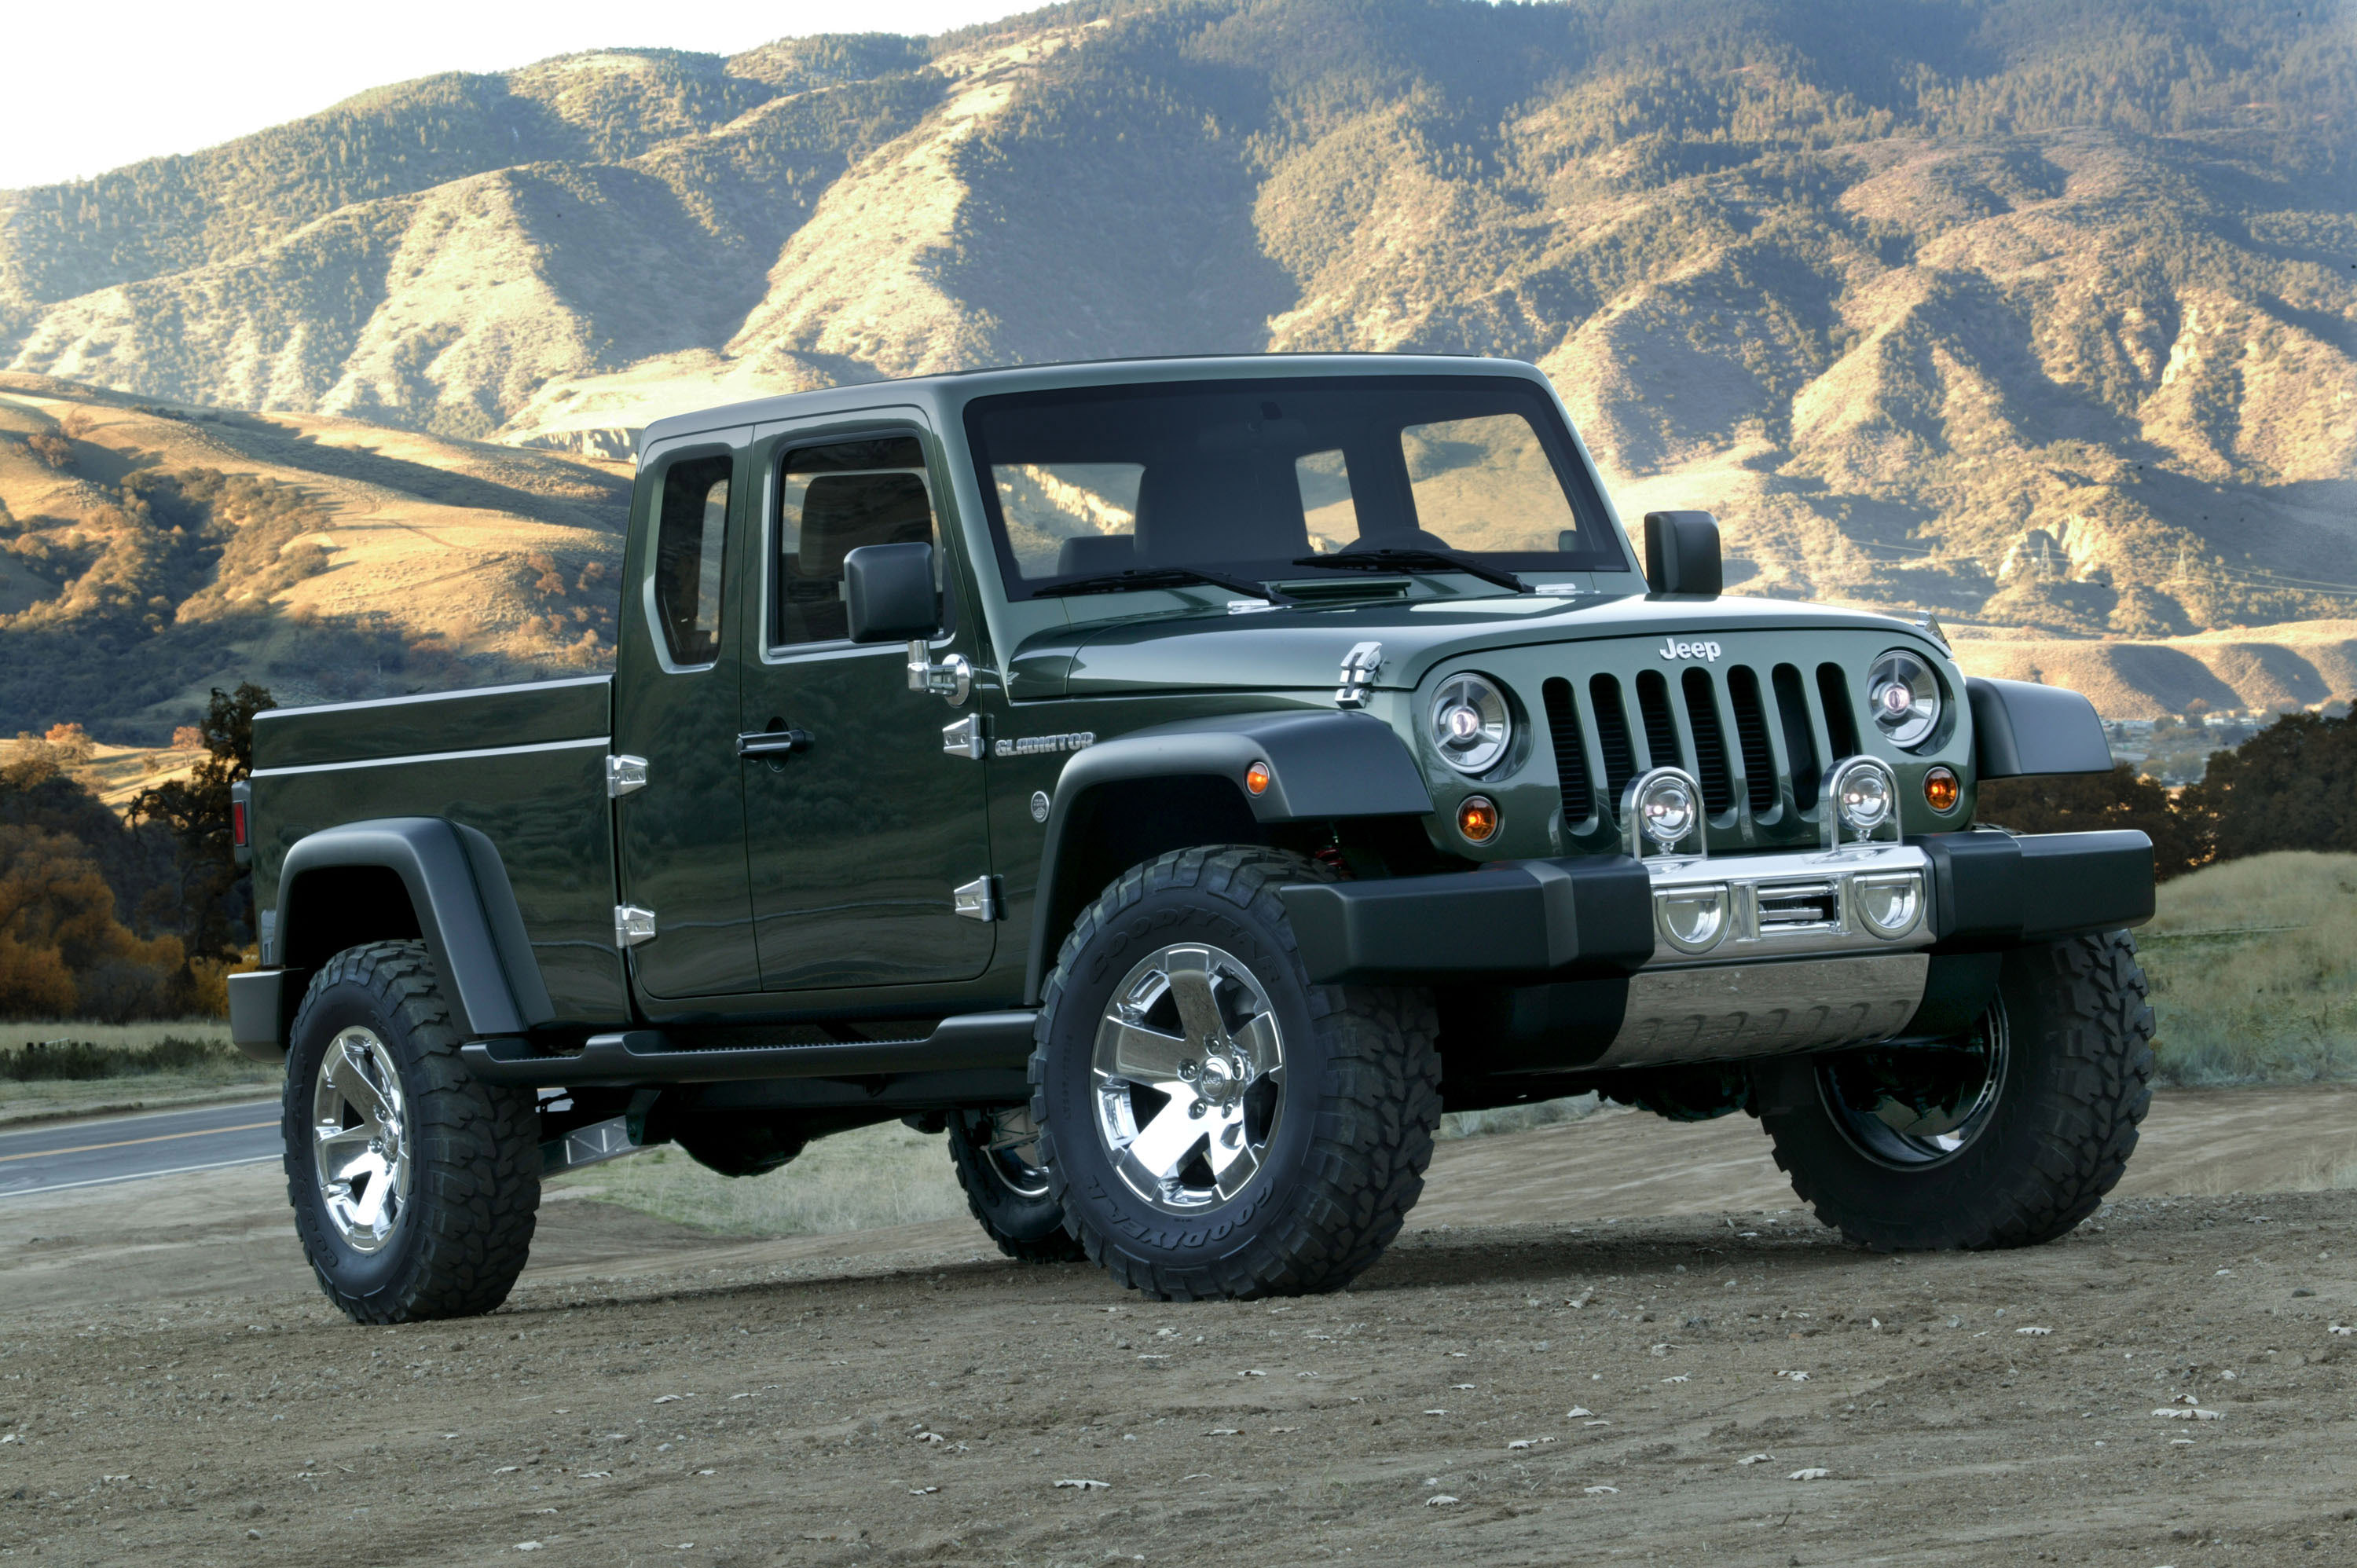 2005 Jeep Gladiator Concept - HD Pictures @ carsinvasion.com